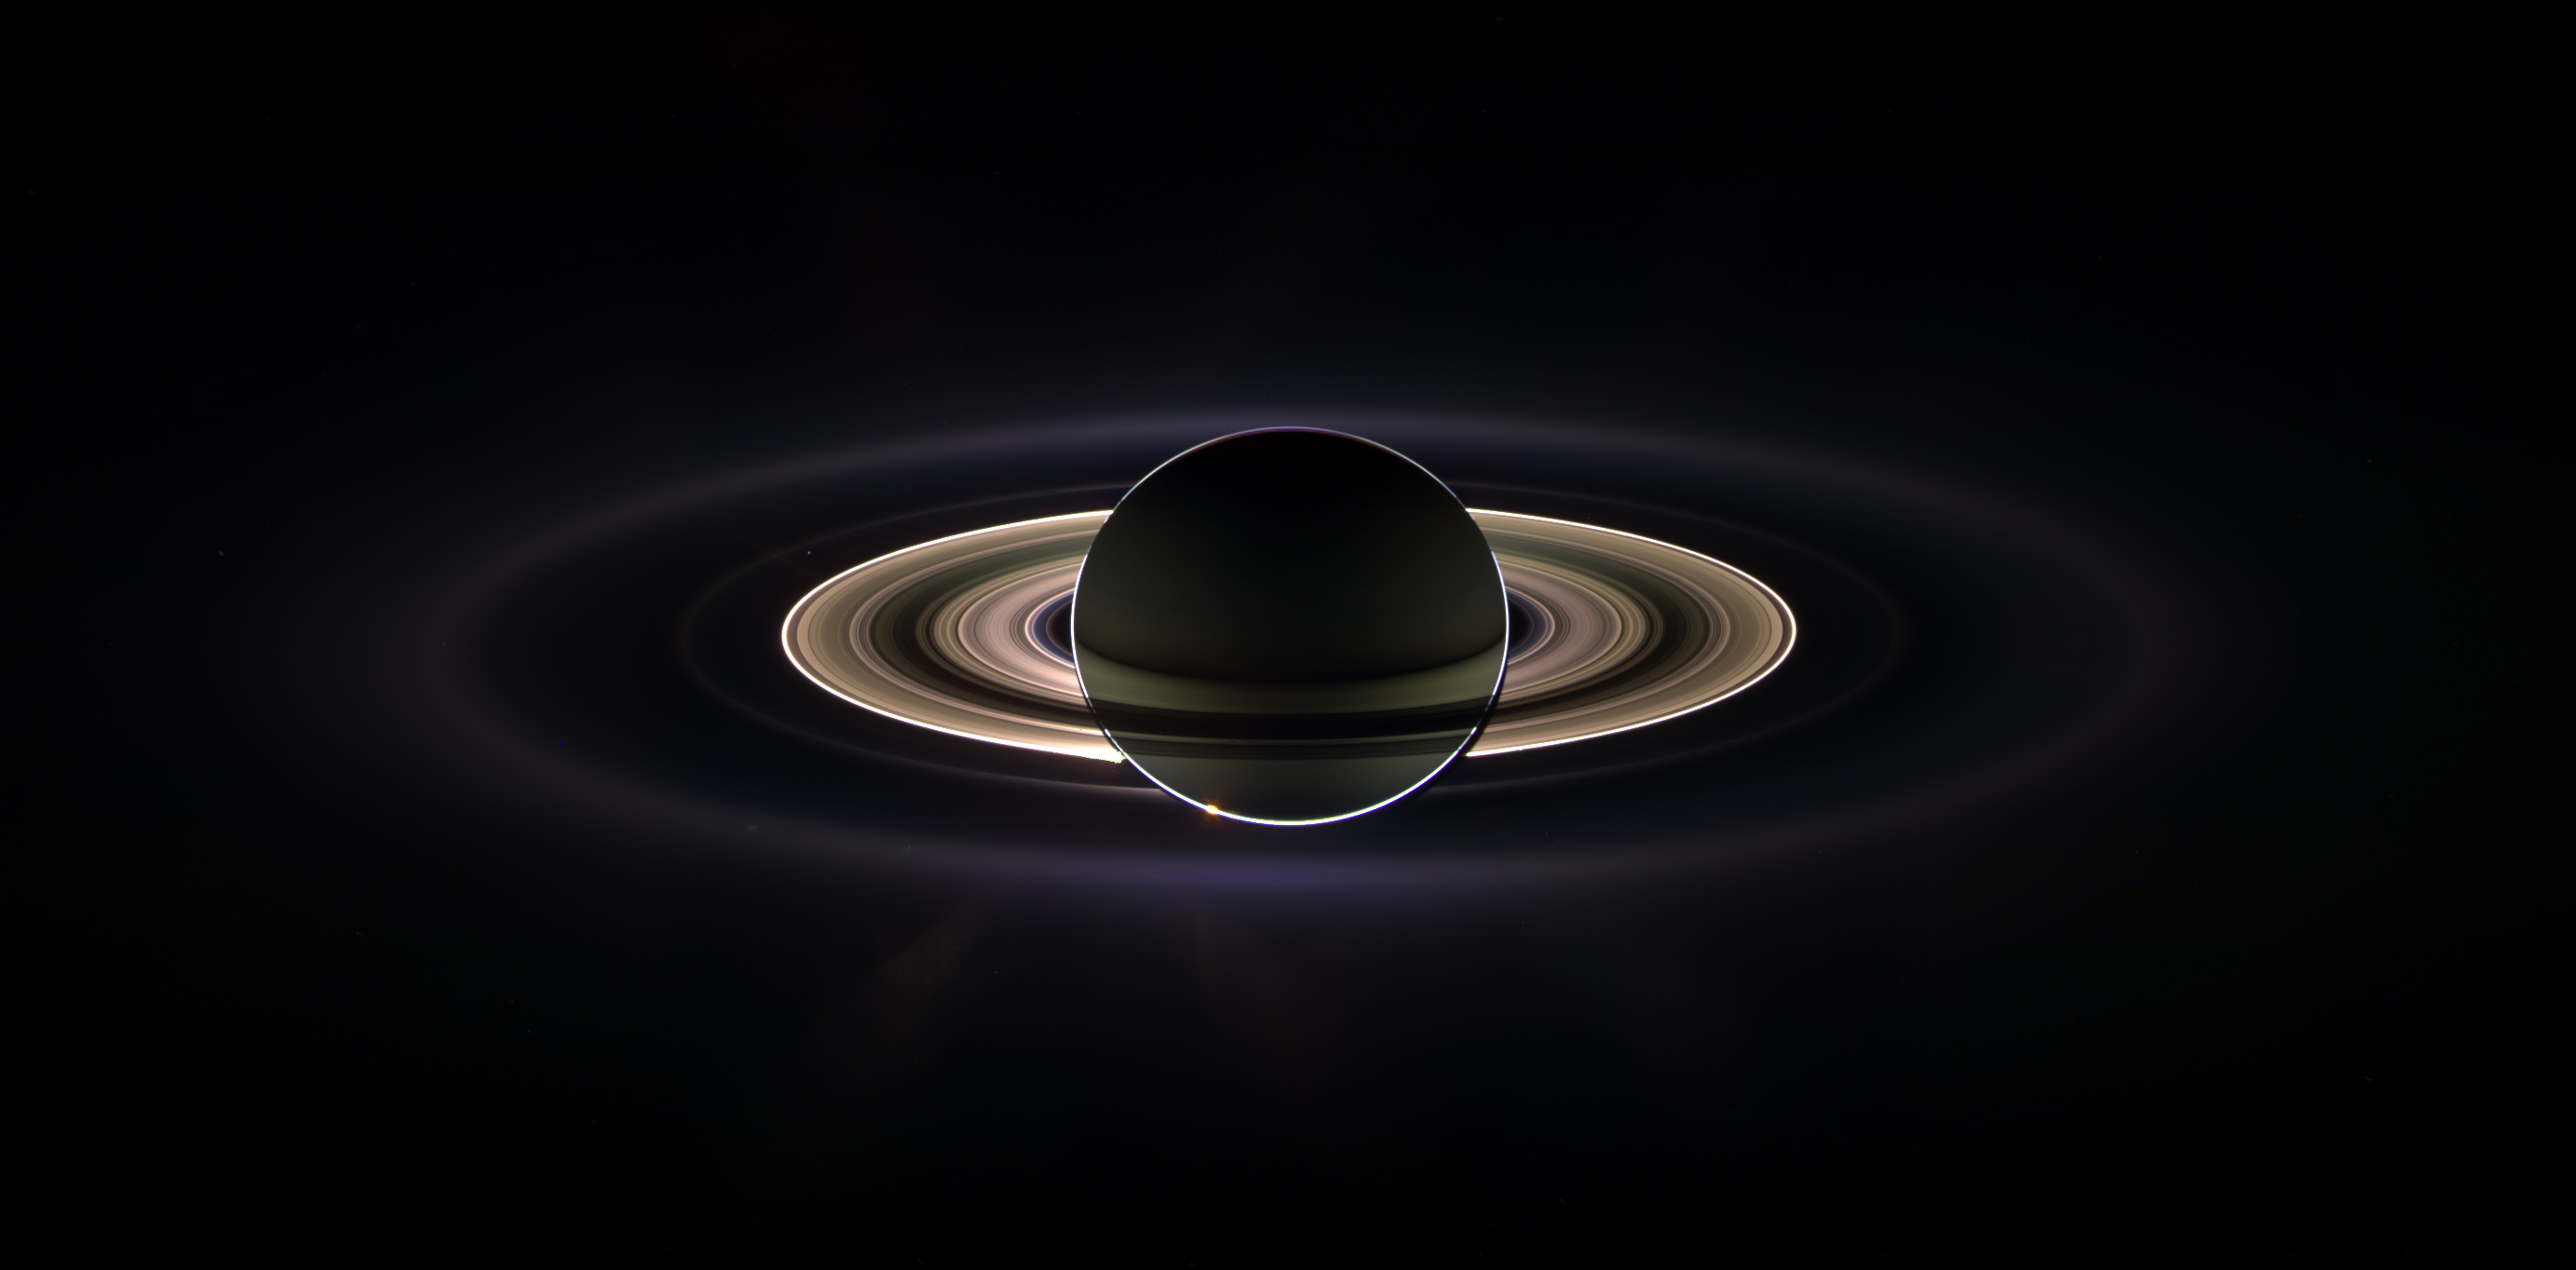 Saturn - Wikipedia